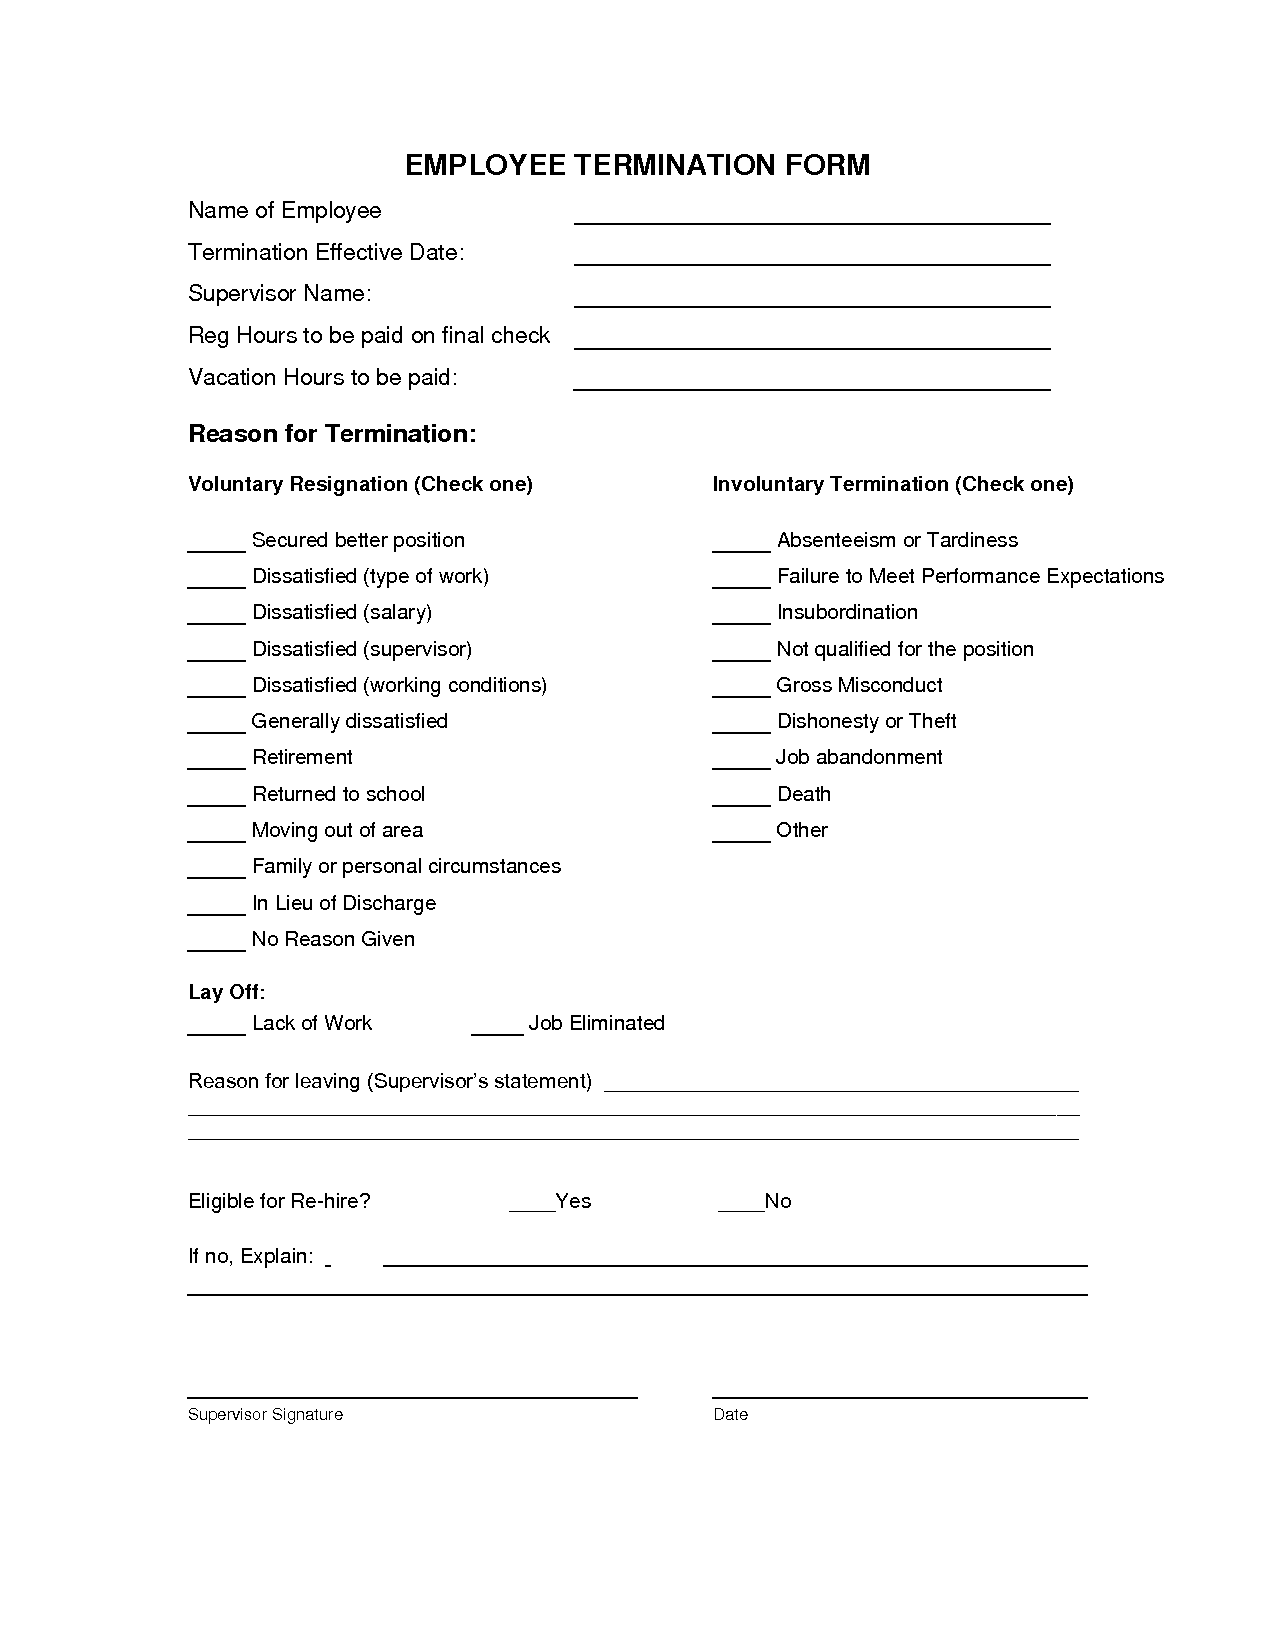 Employee Termination Form Free Printable Documents